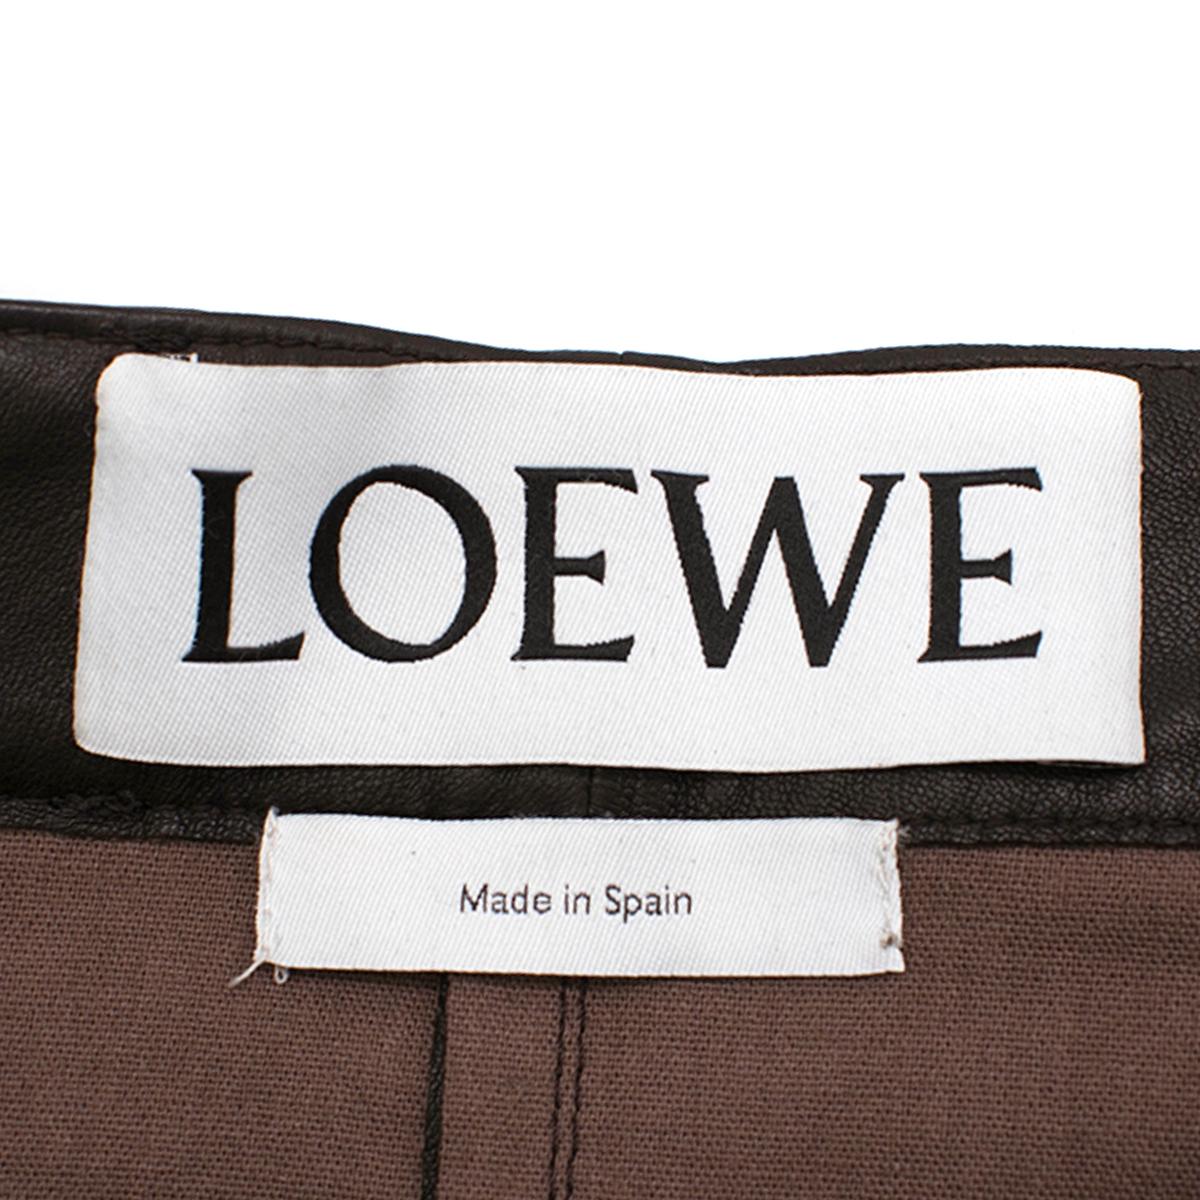 loewe label